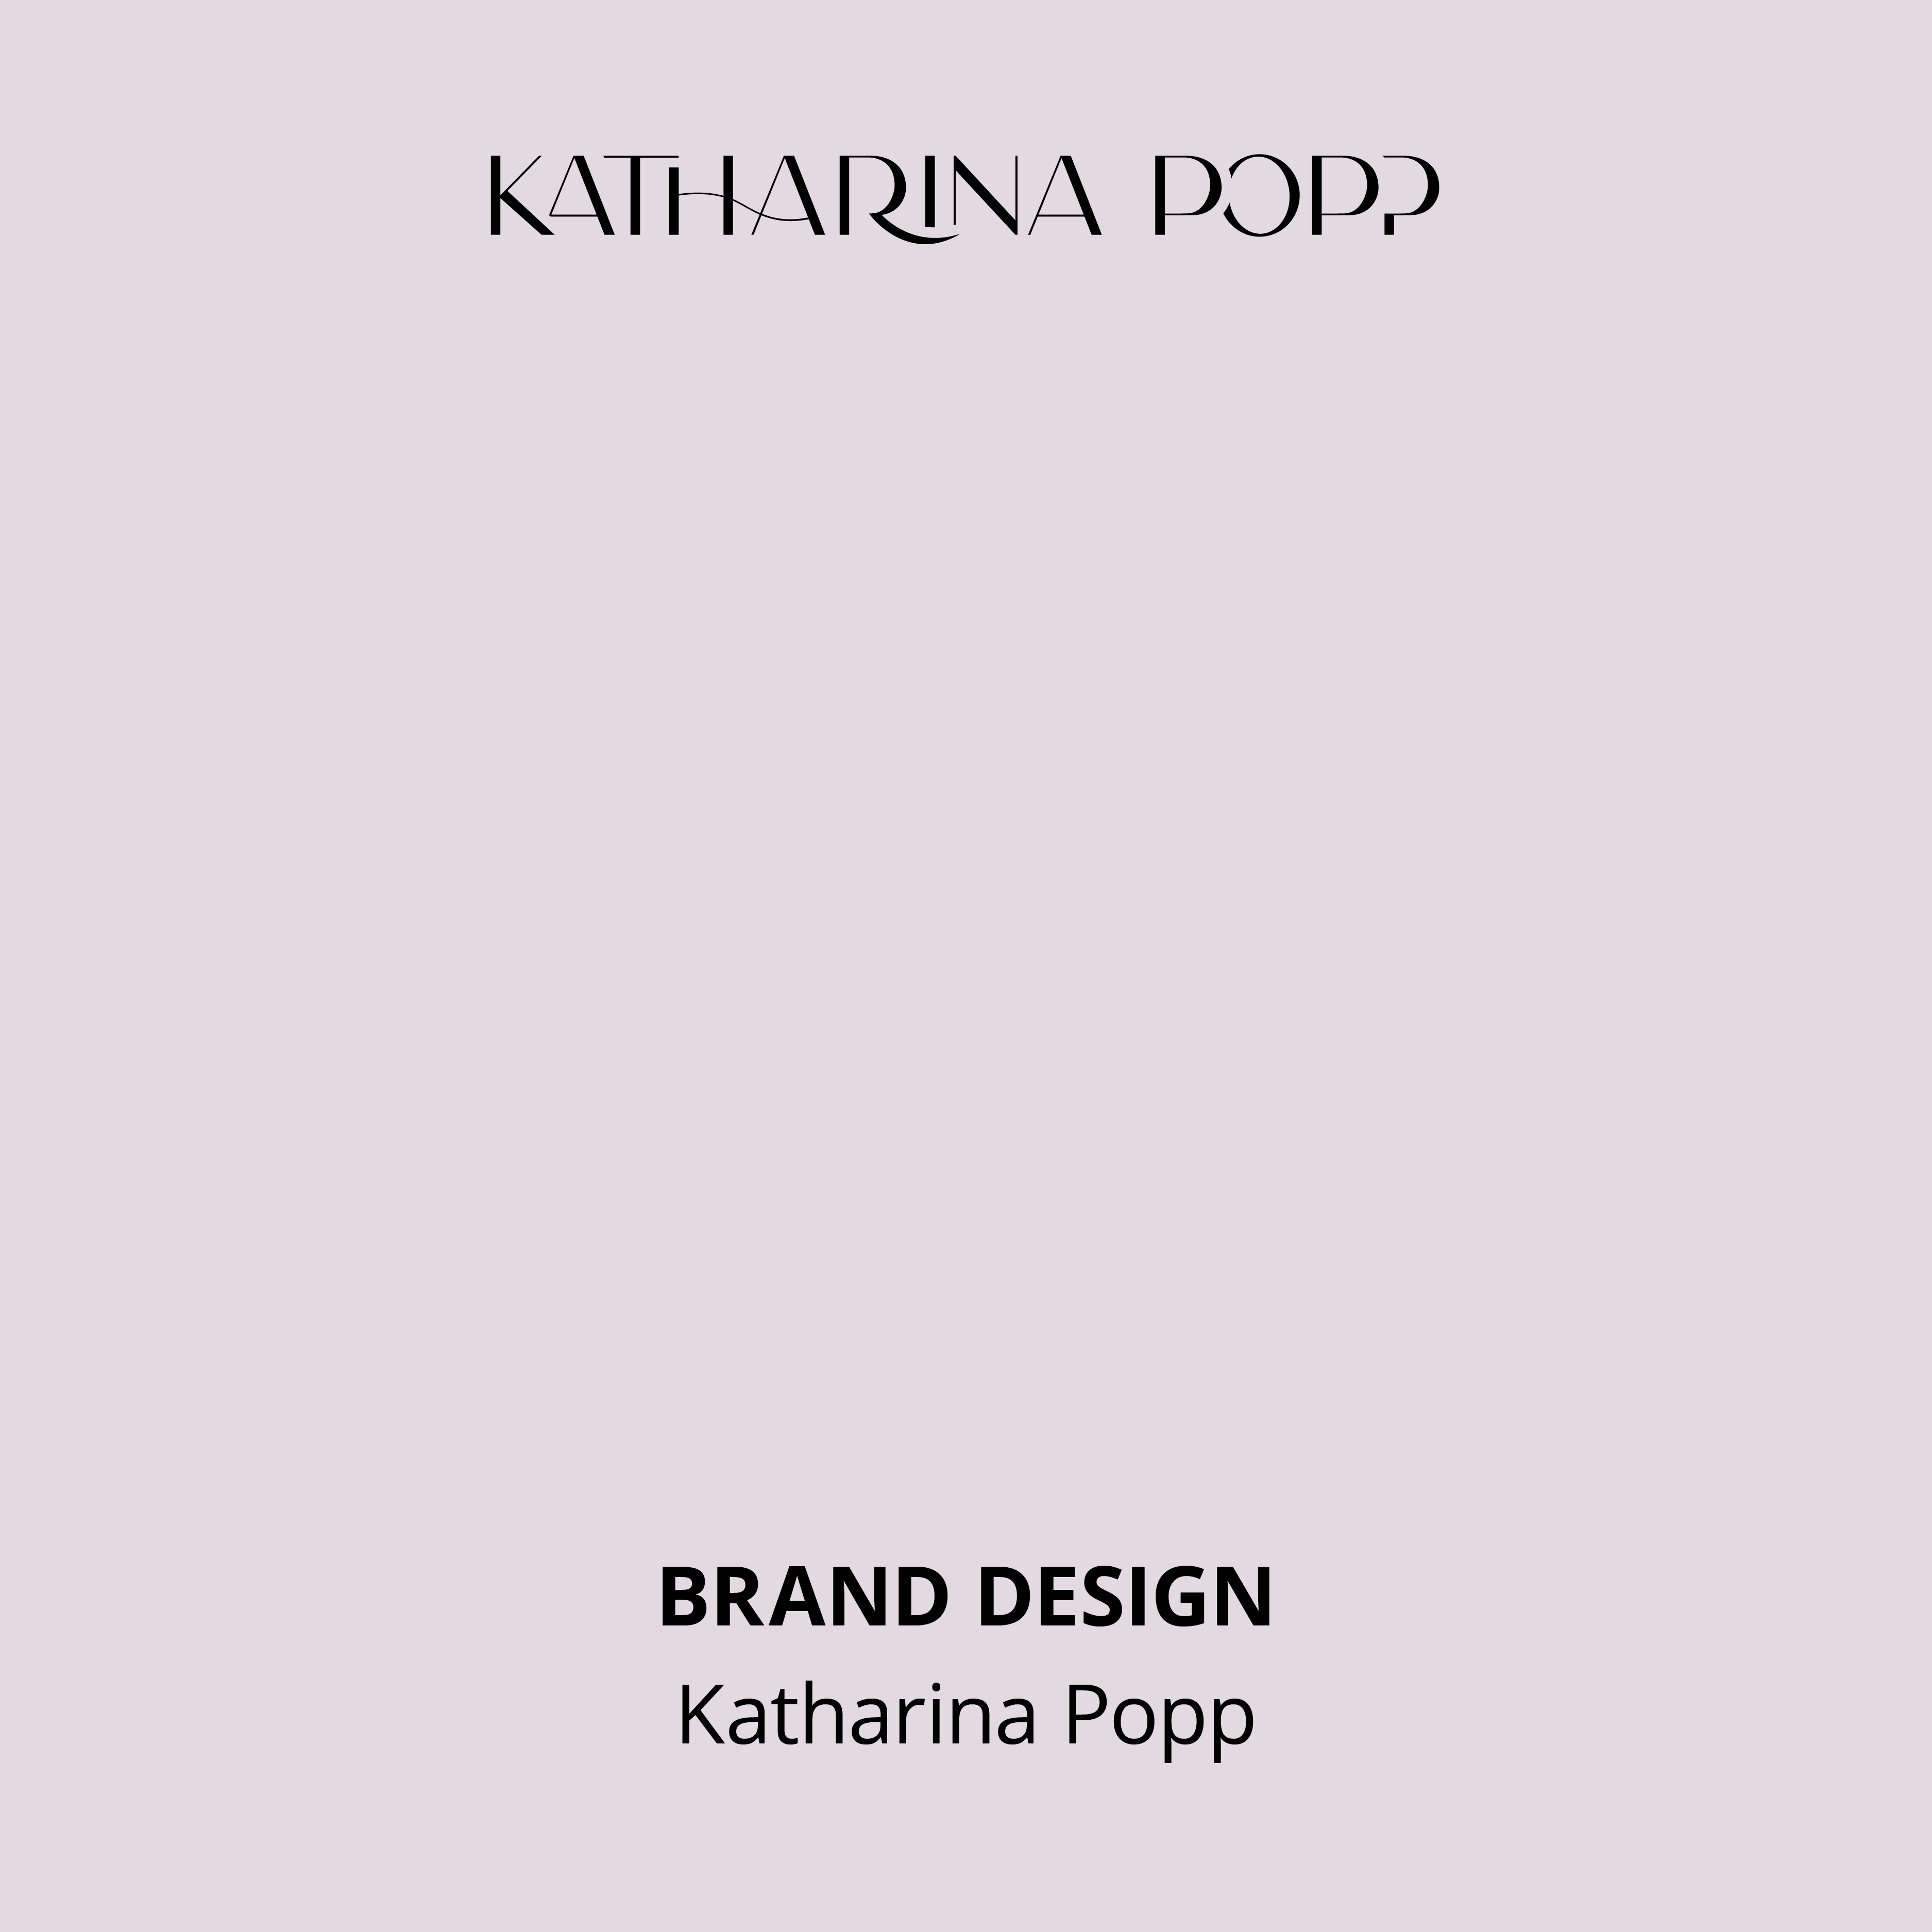 Projekt Katharina Popp